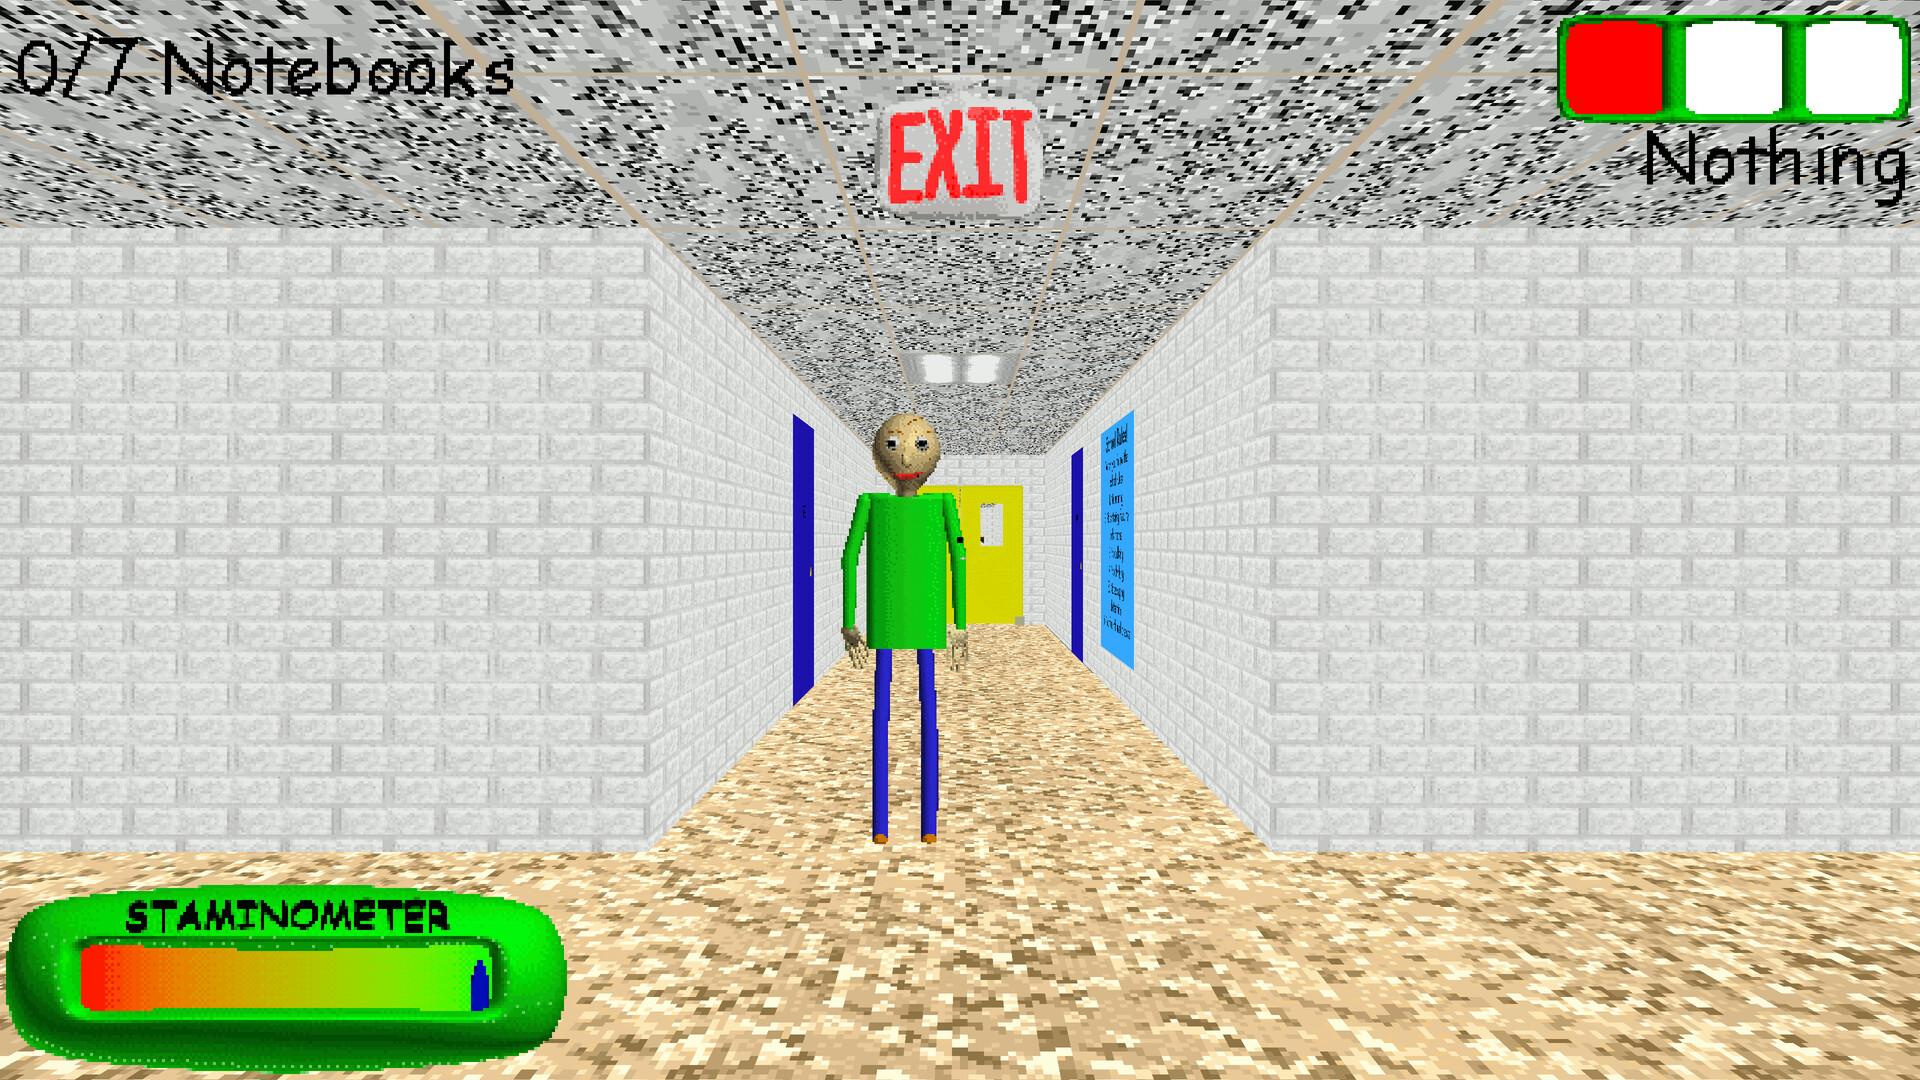 Screenshot №1 from game Baldi's Basics Classic Remastered